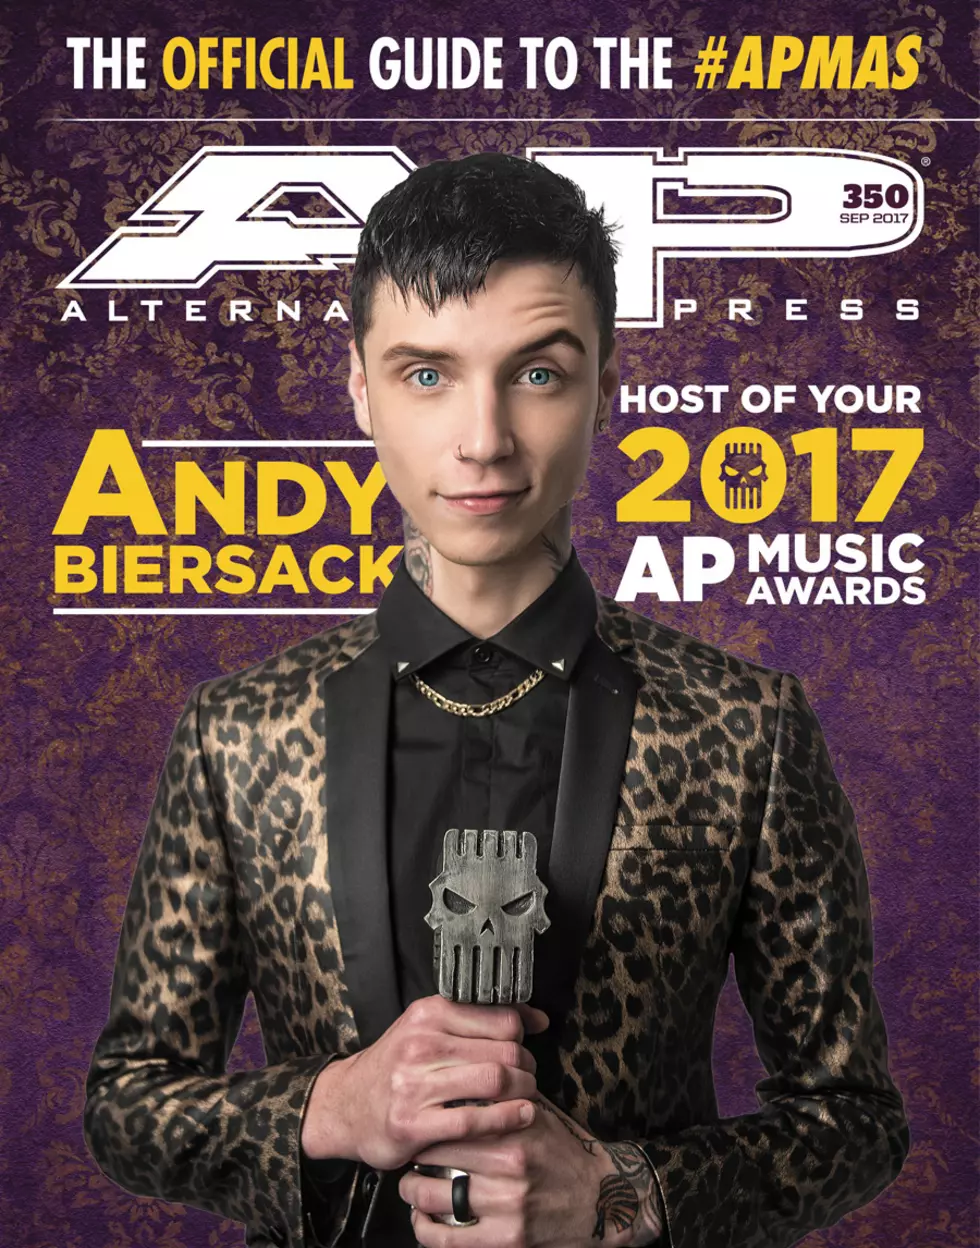 The 2017 Alternative Press Music Awards